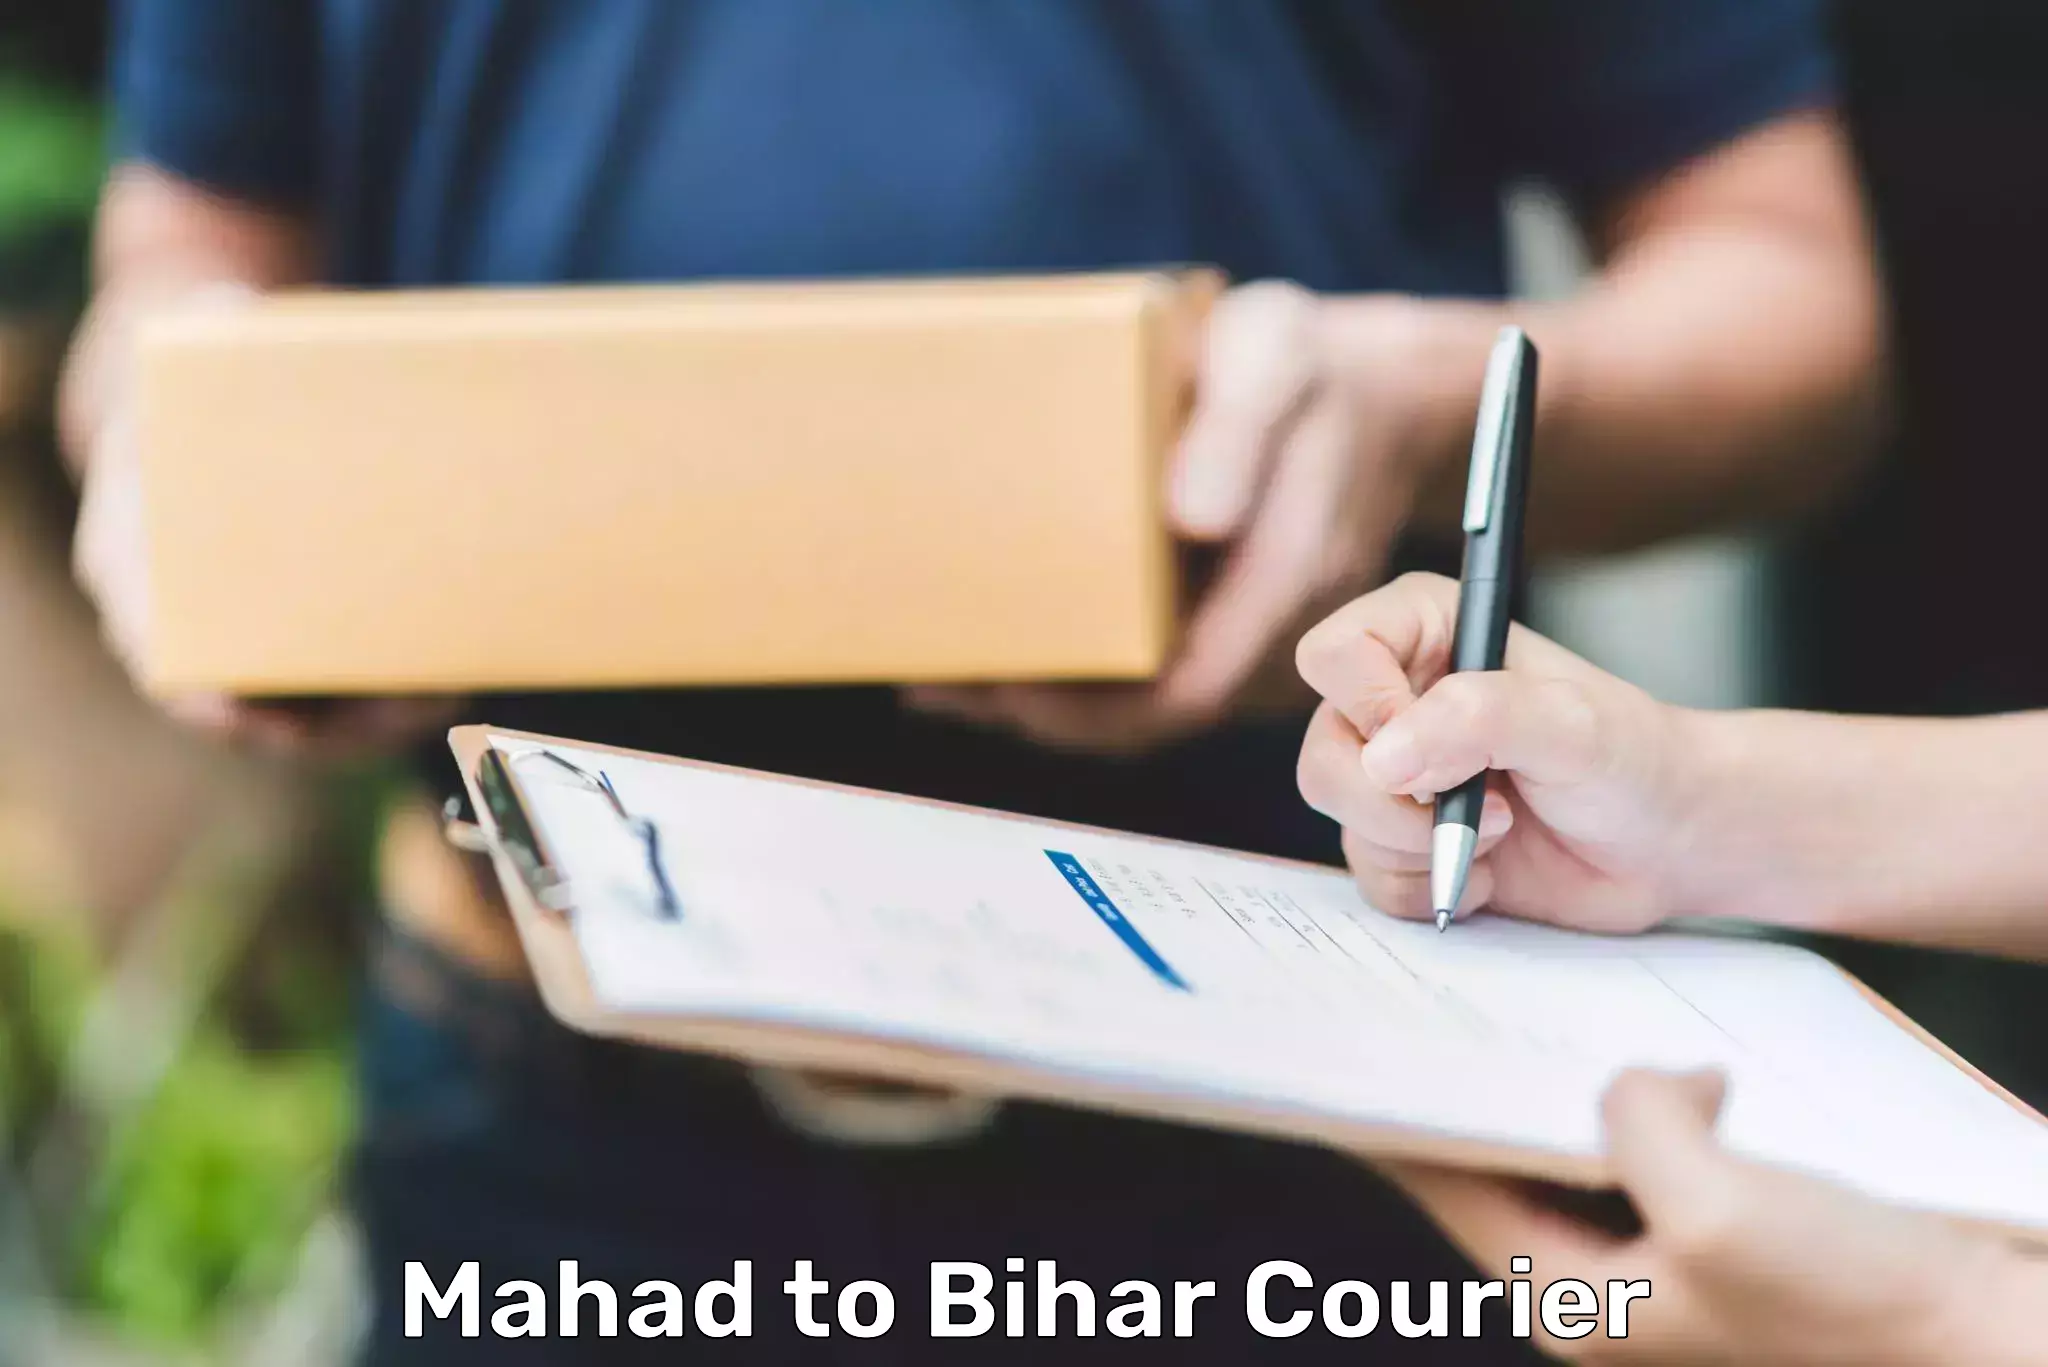 Courier rate comparison in Mahad to Aurangabad Bihar